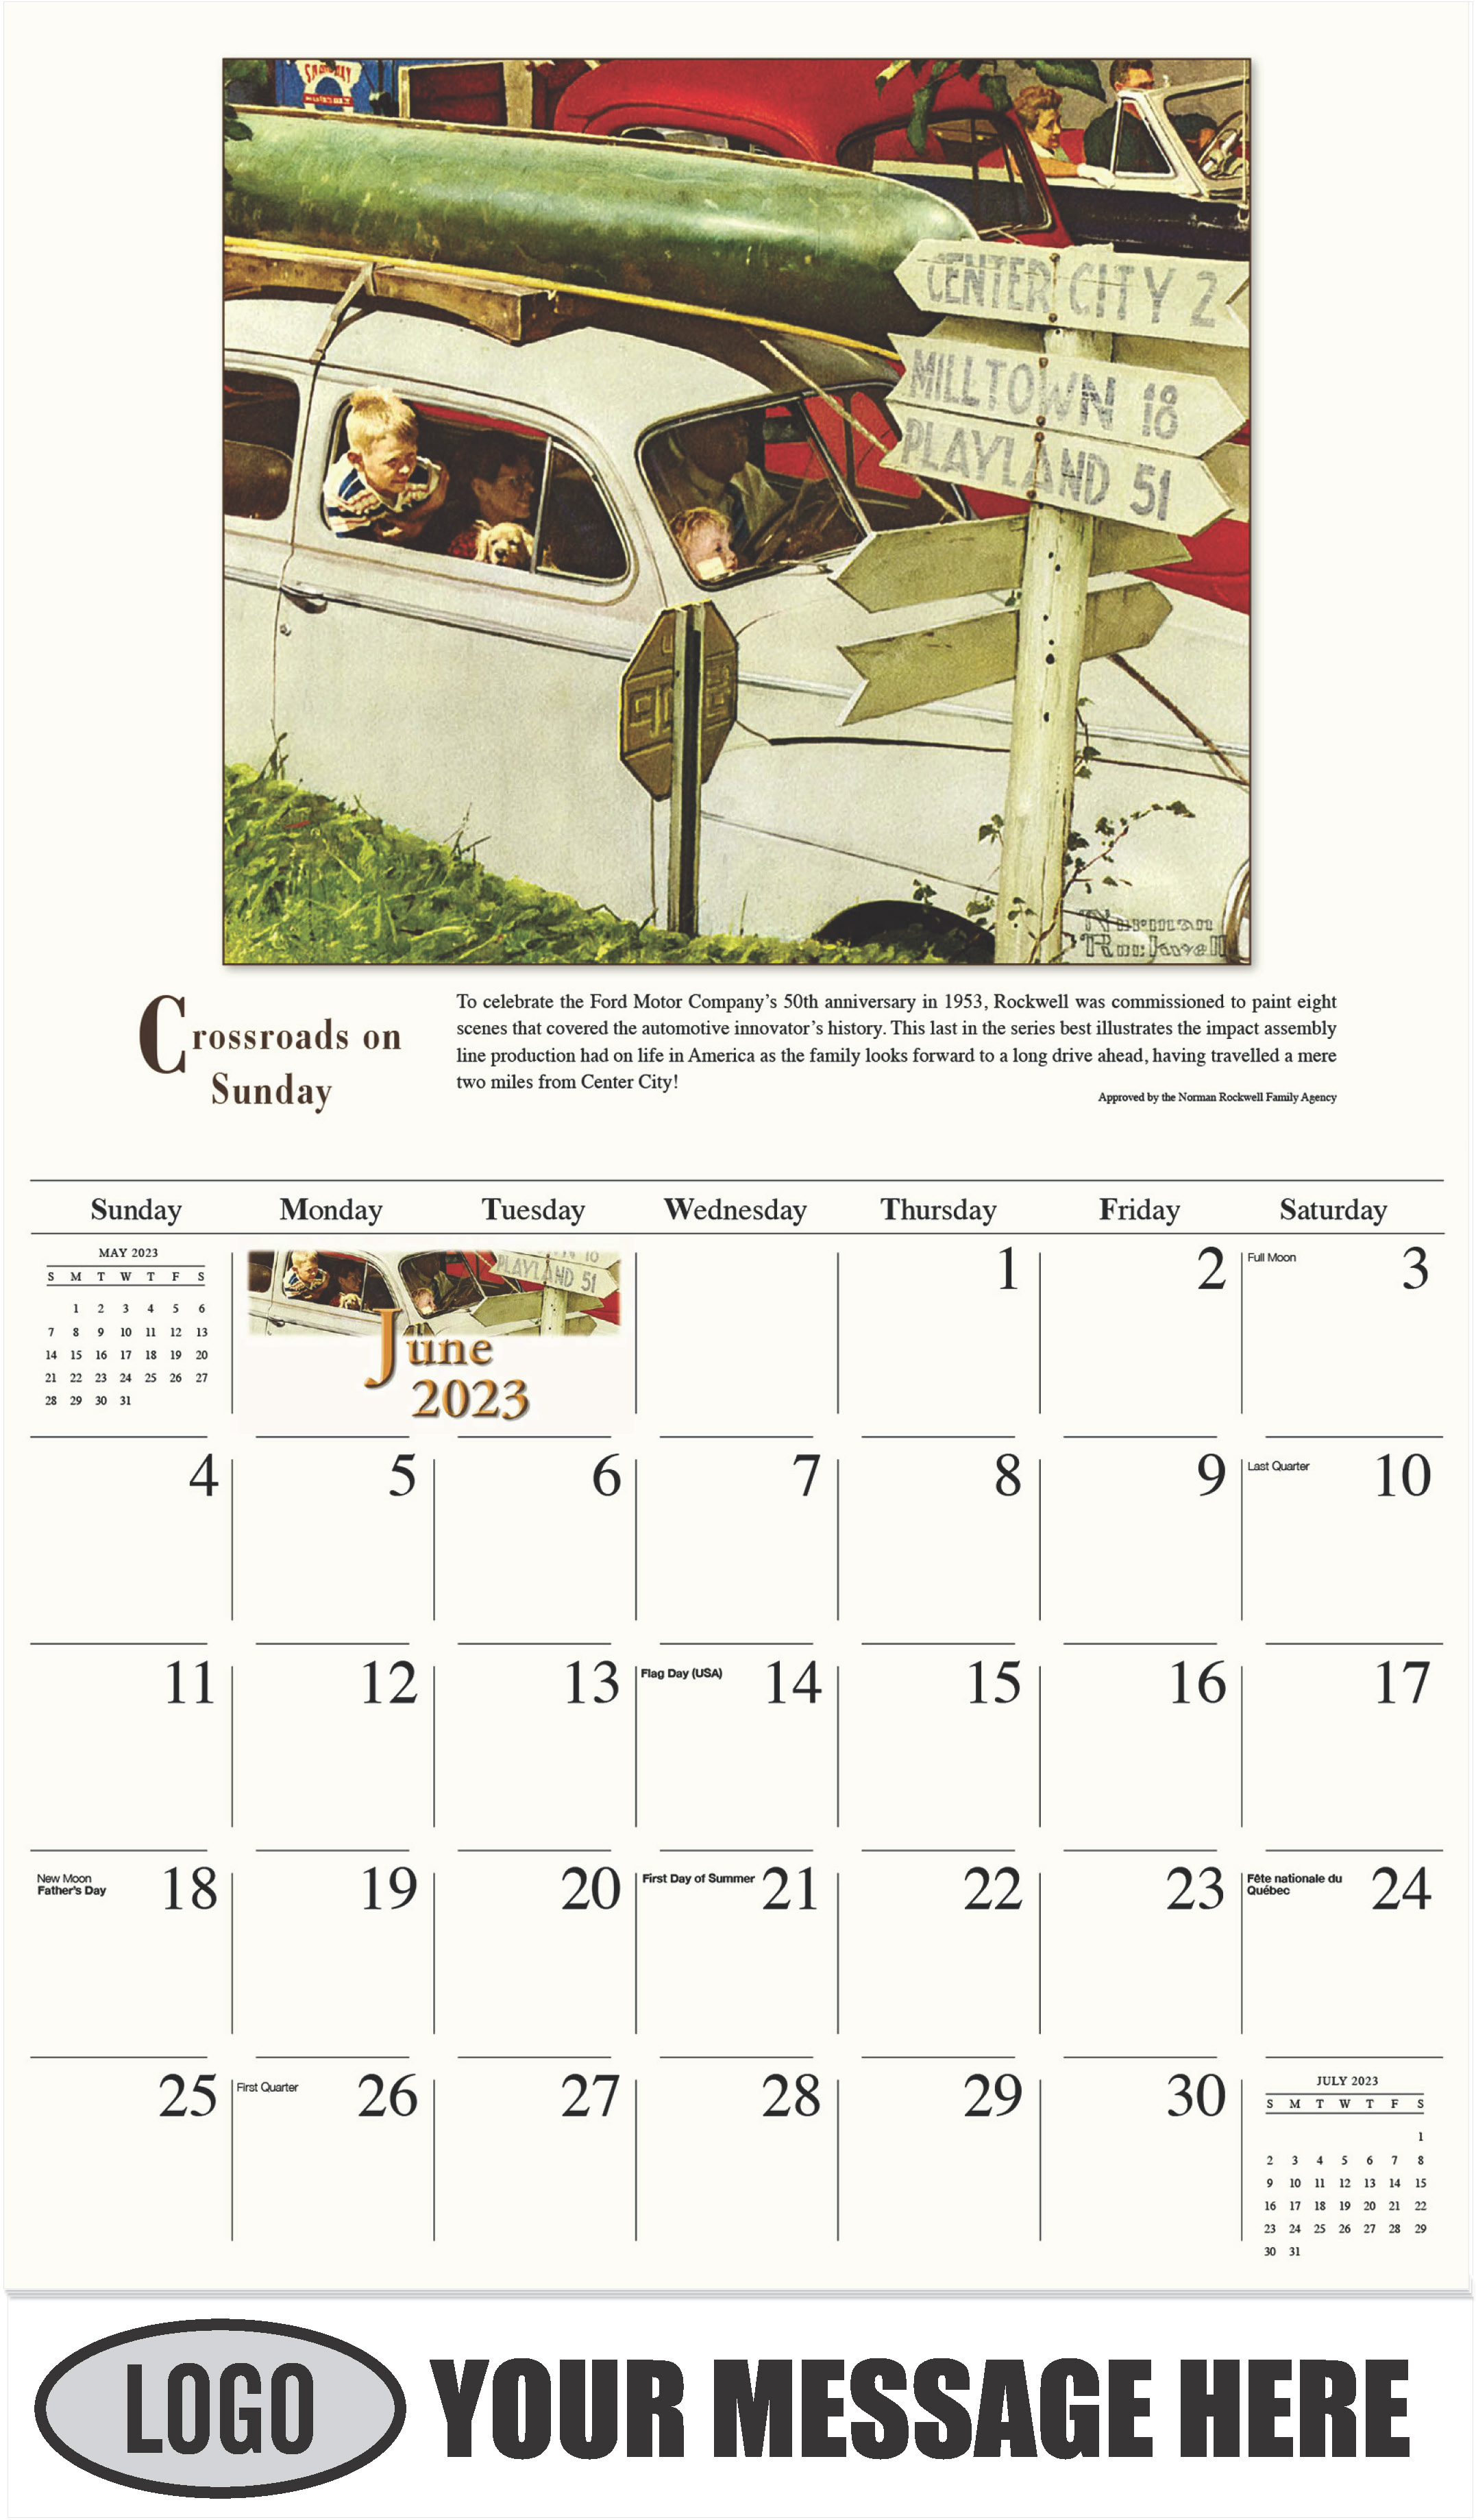 Crossroads on Sunday - June - Norman Rockwell - Memorable Images 2023 Promotional Calendar